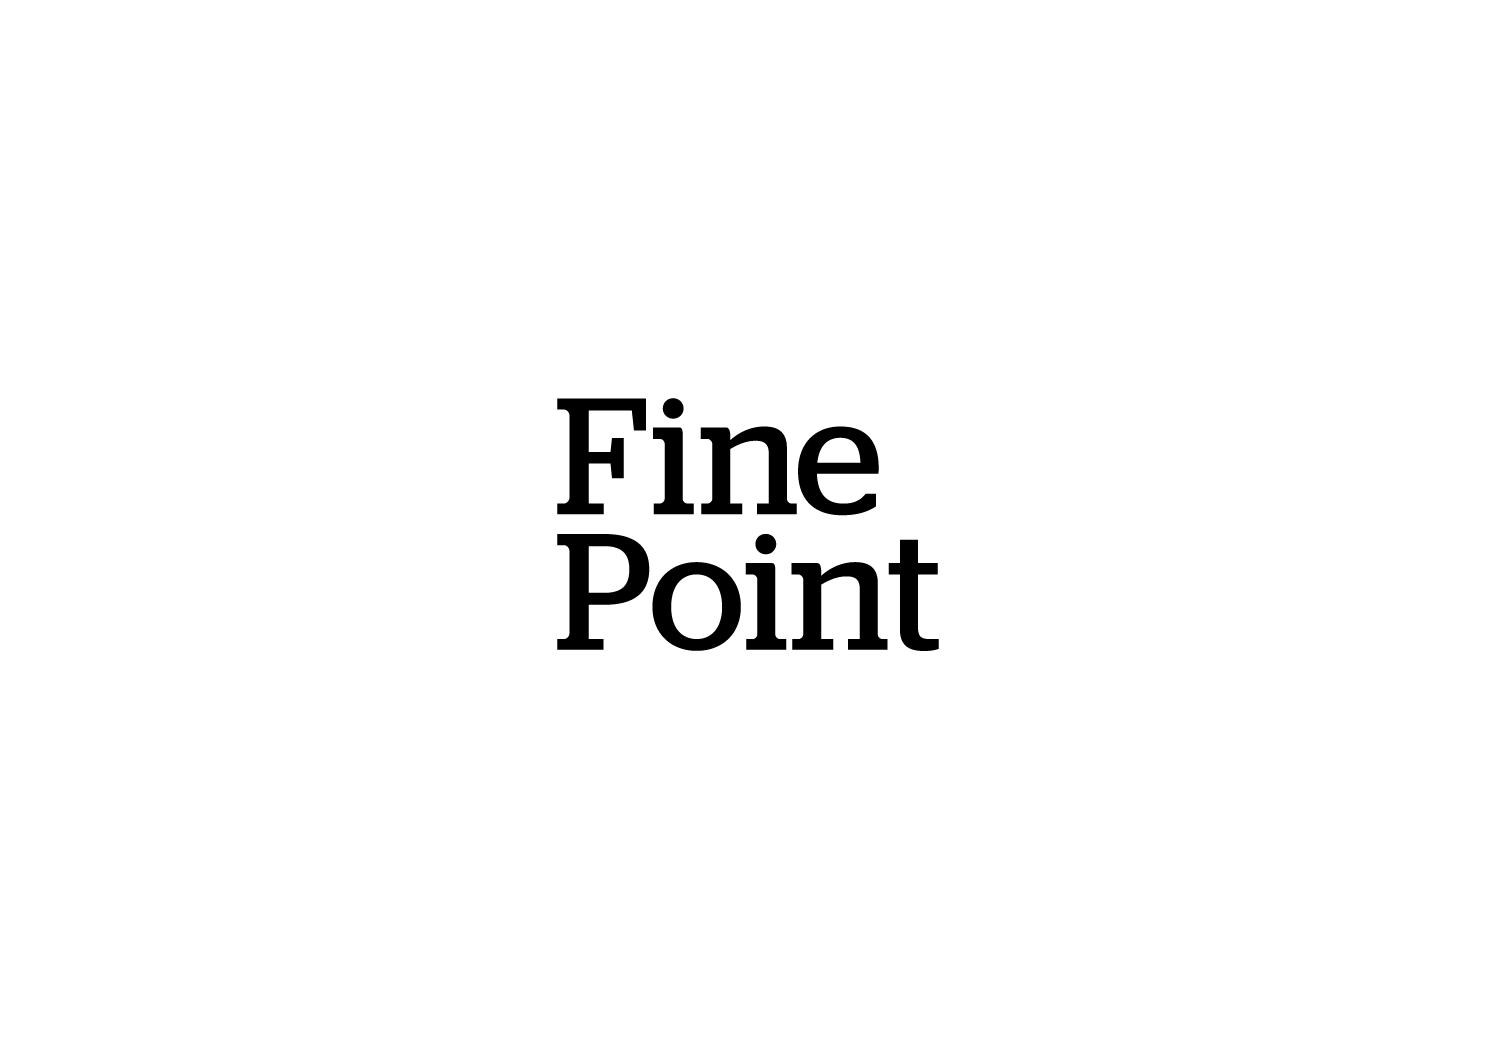 Fine Point Films